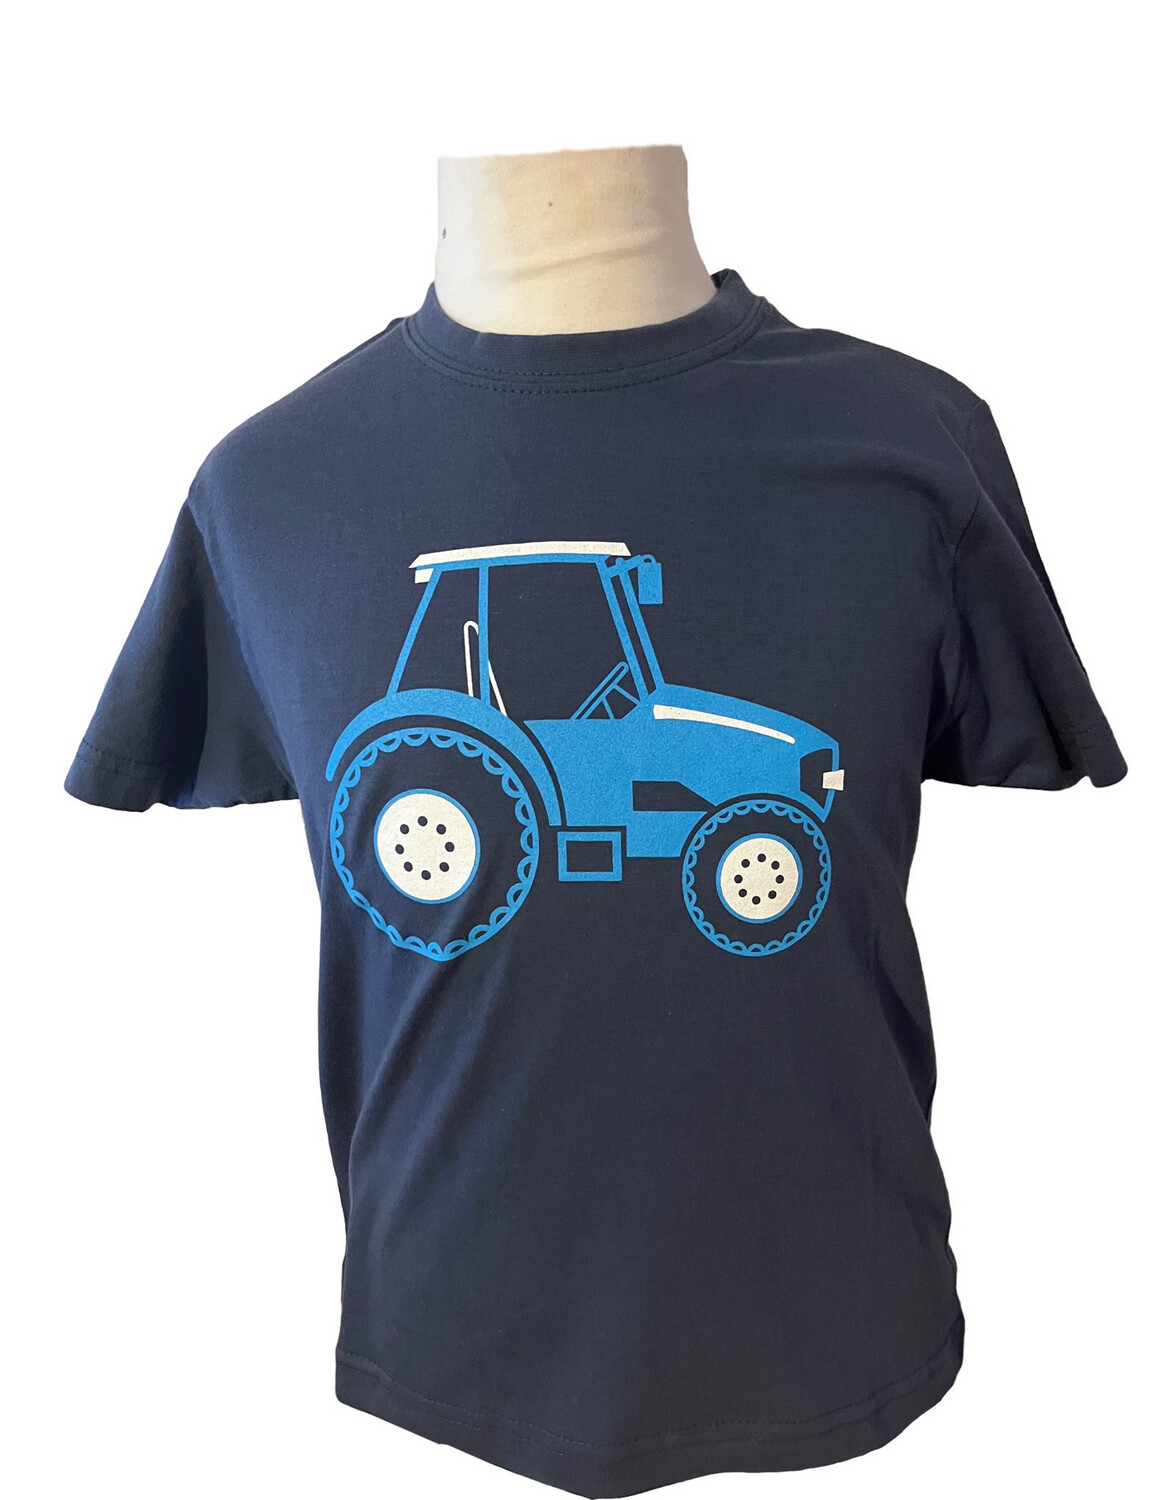 Blue tractor tee